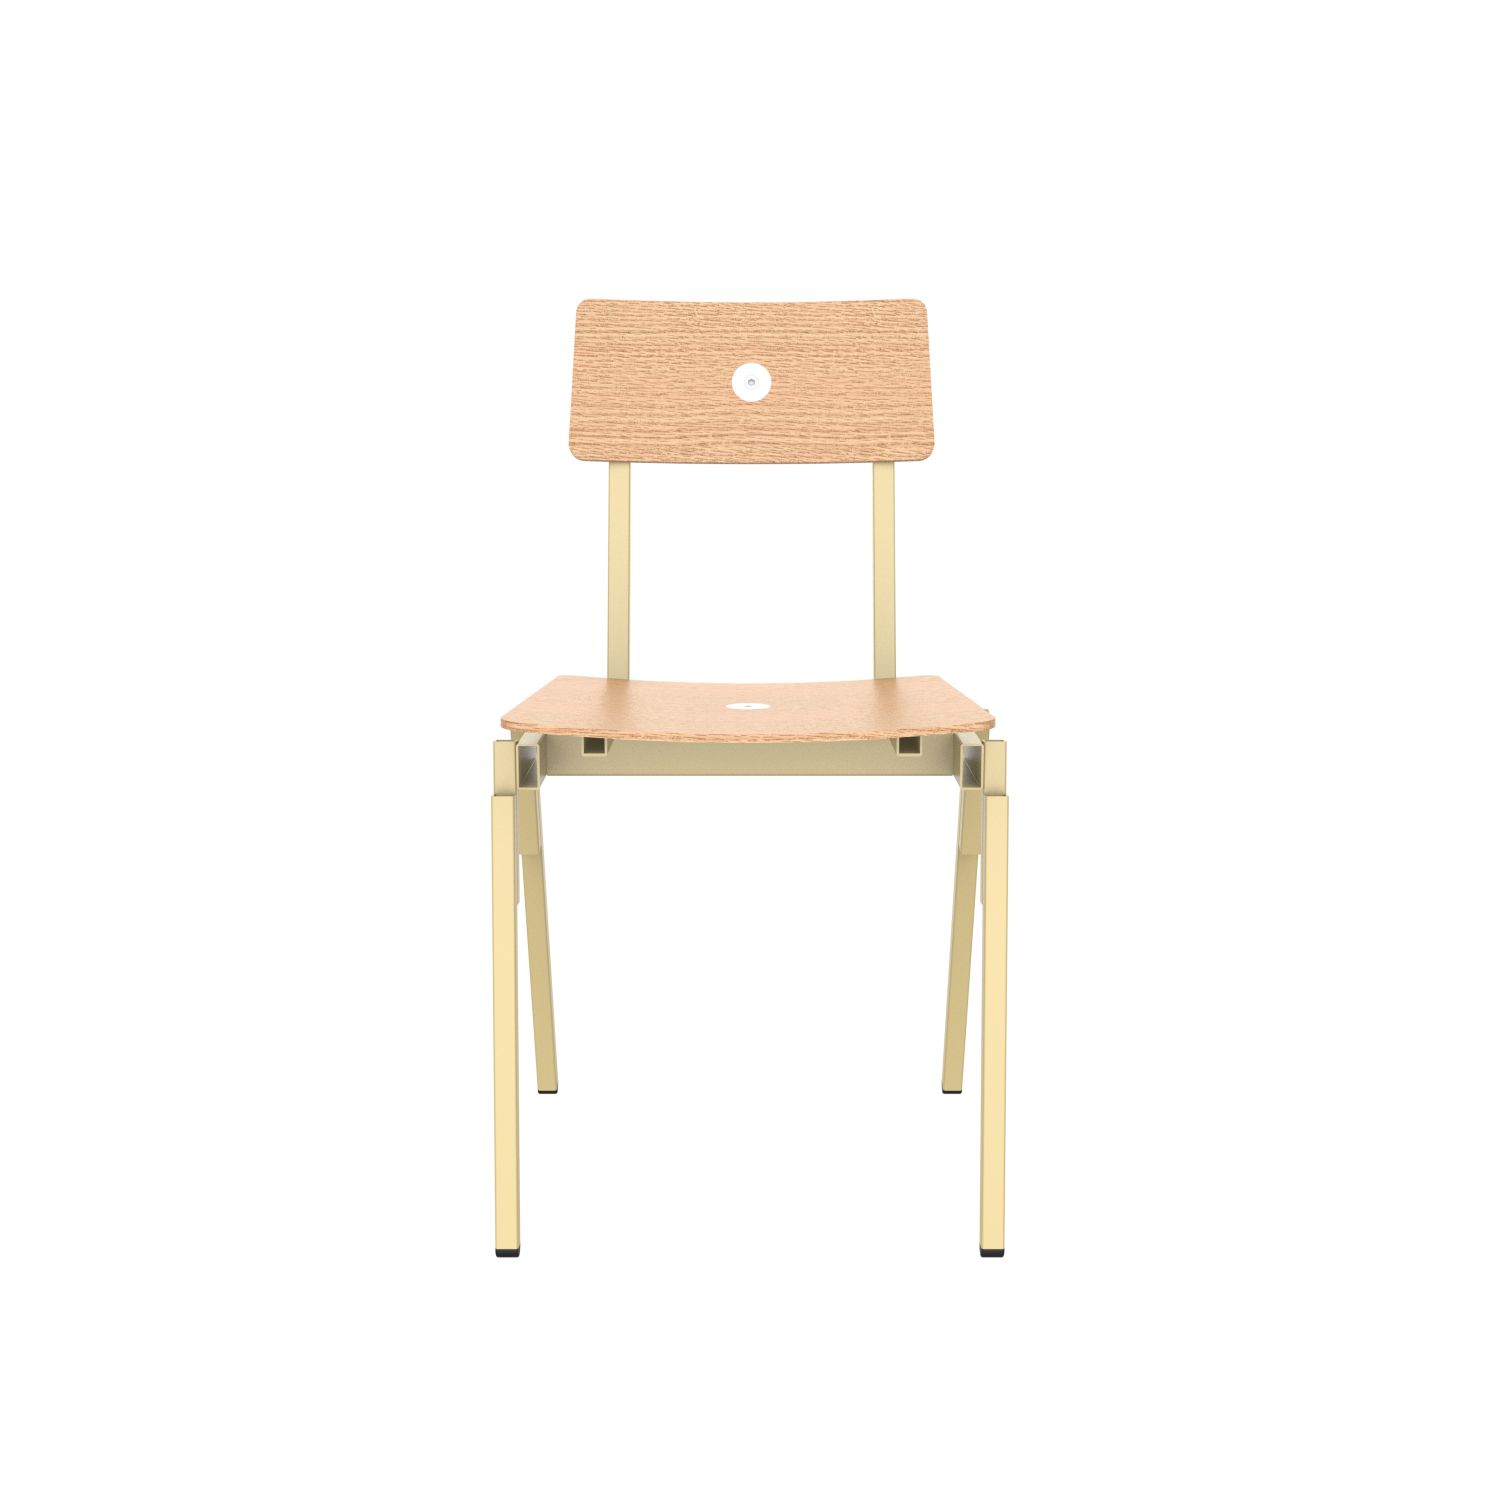 lensvelt piet hein eek mitw wooden chair without armrests natural oak green beige ral1000 hard leg ends